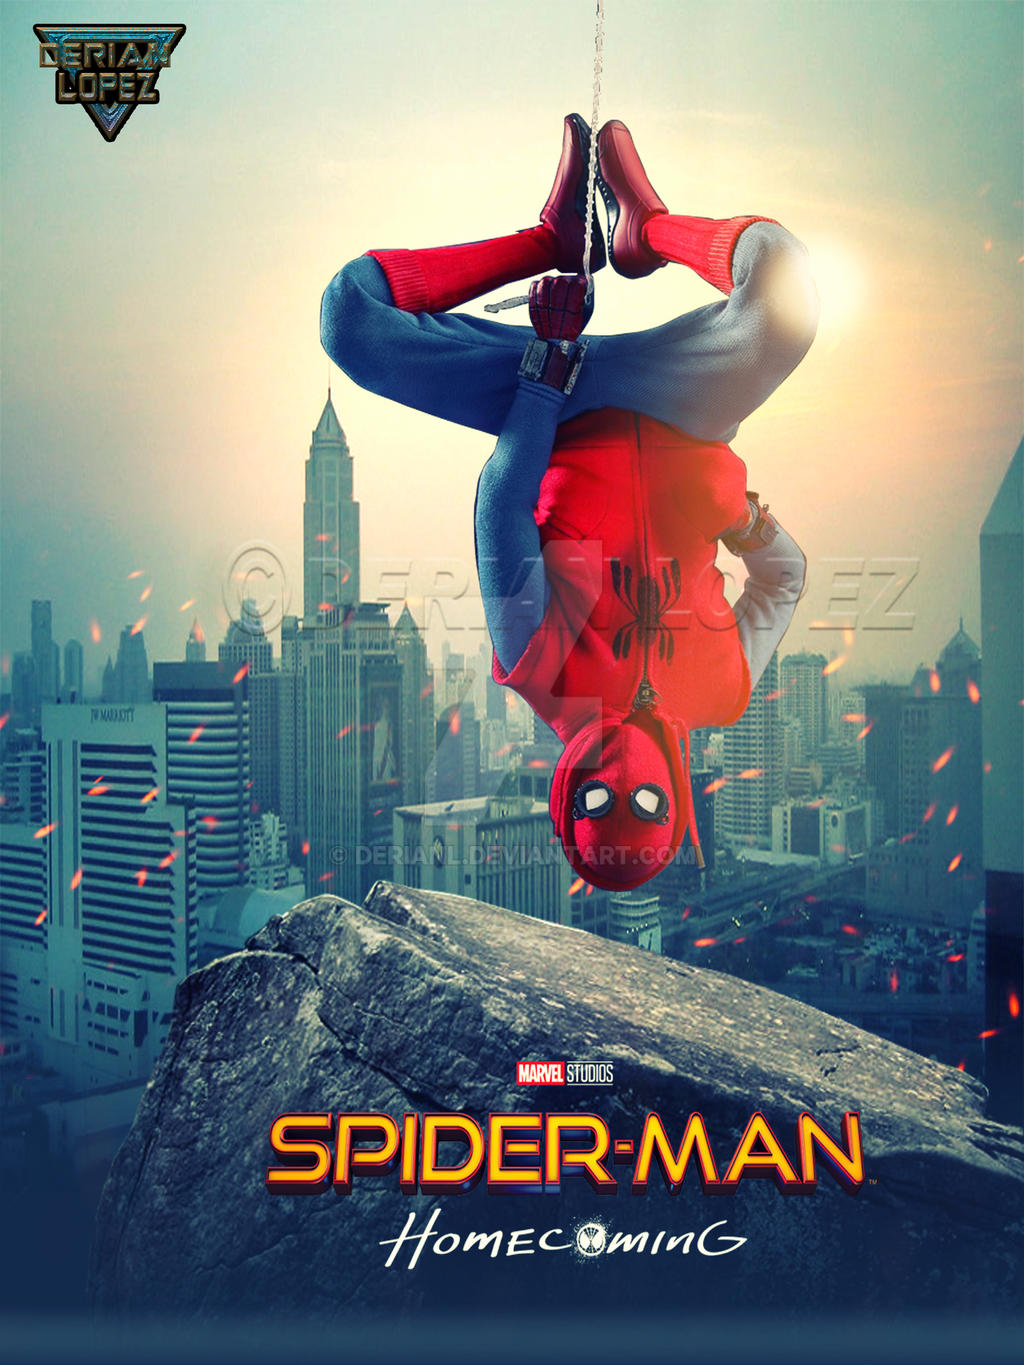 Spider-man Homecoming Poster Revised 2 by derianl on DeviantArt